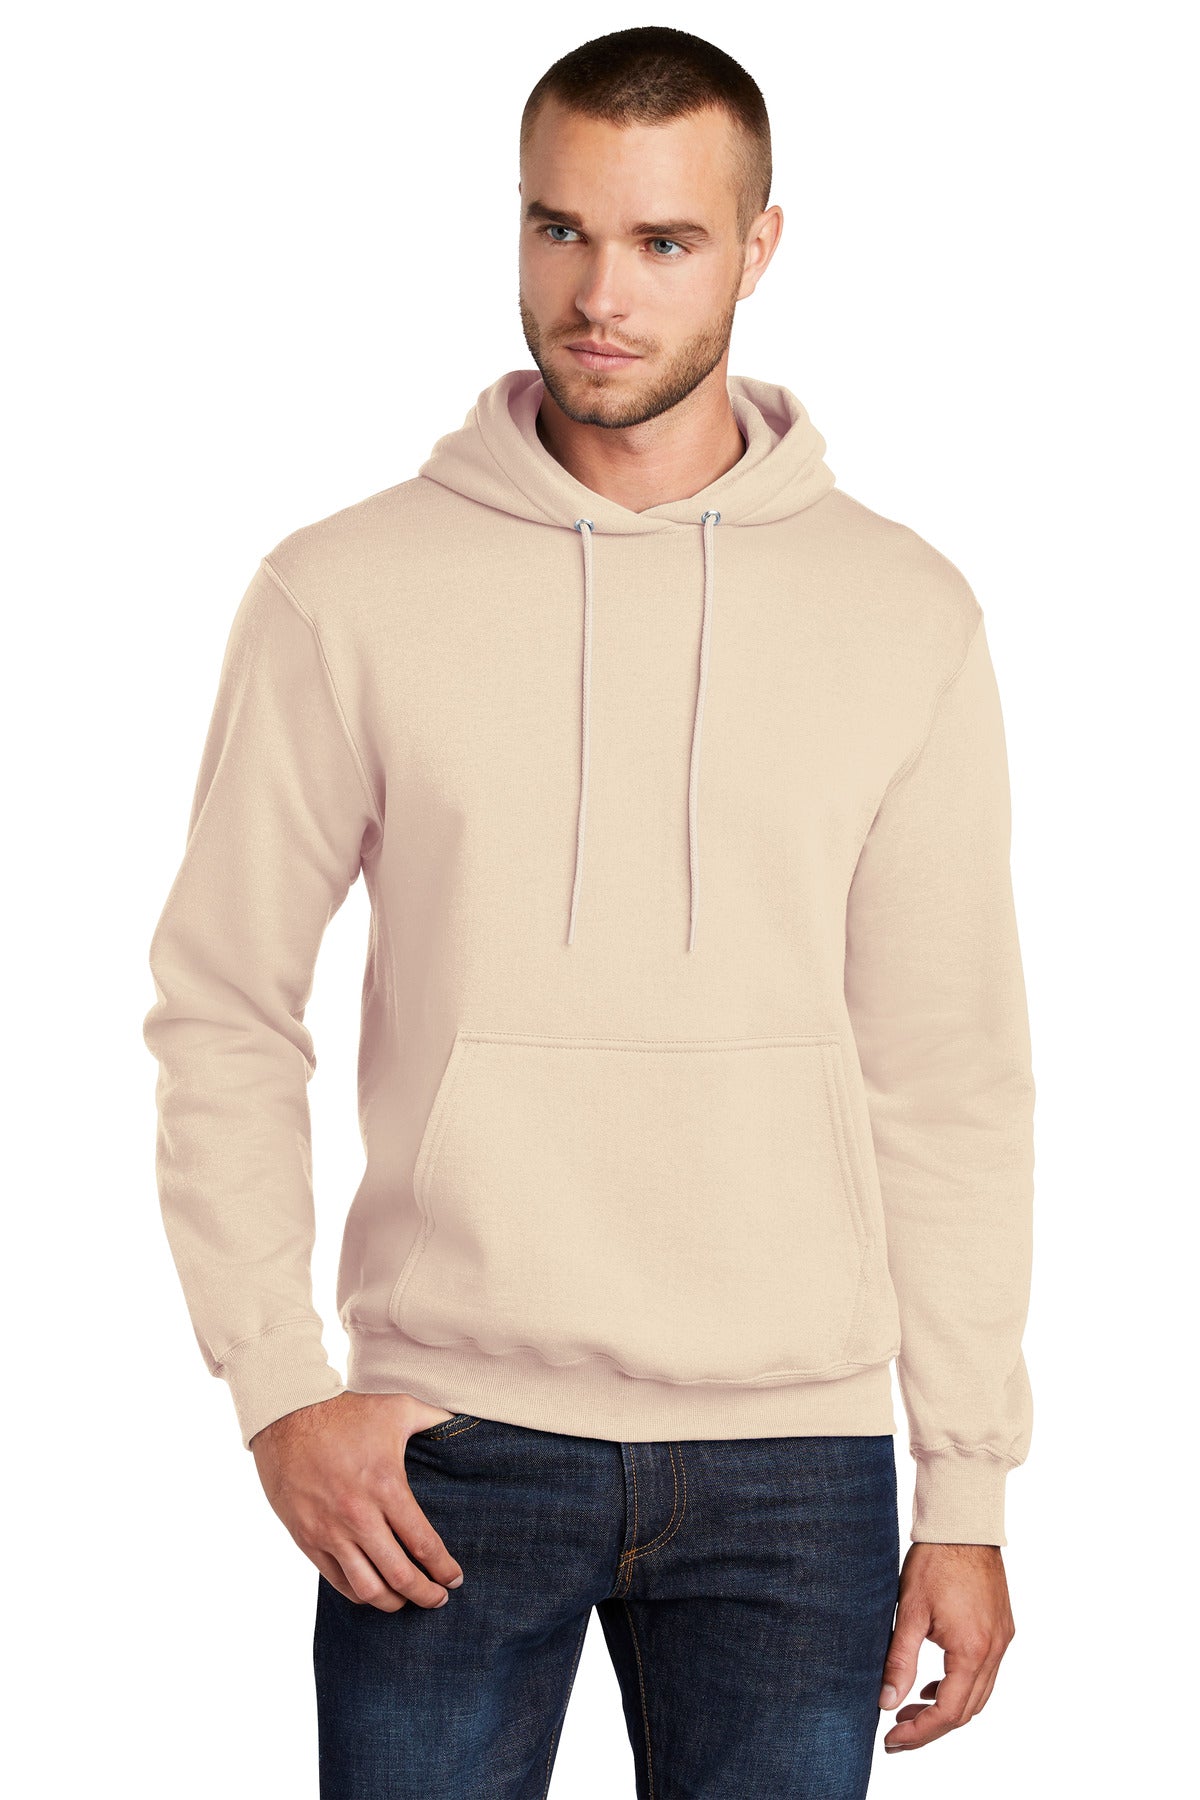 Port & Company - Core Fleece Pullover Hooded Sweatshirt. PC78H - Creme